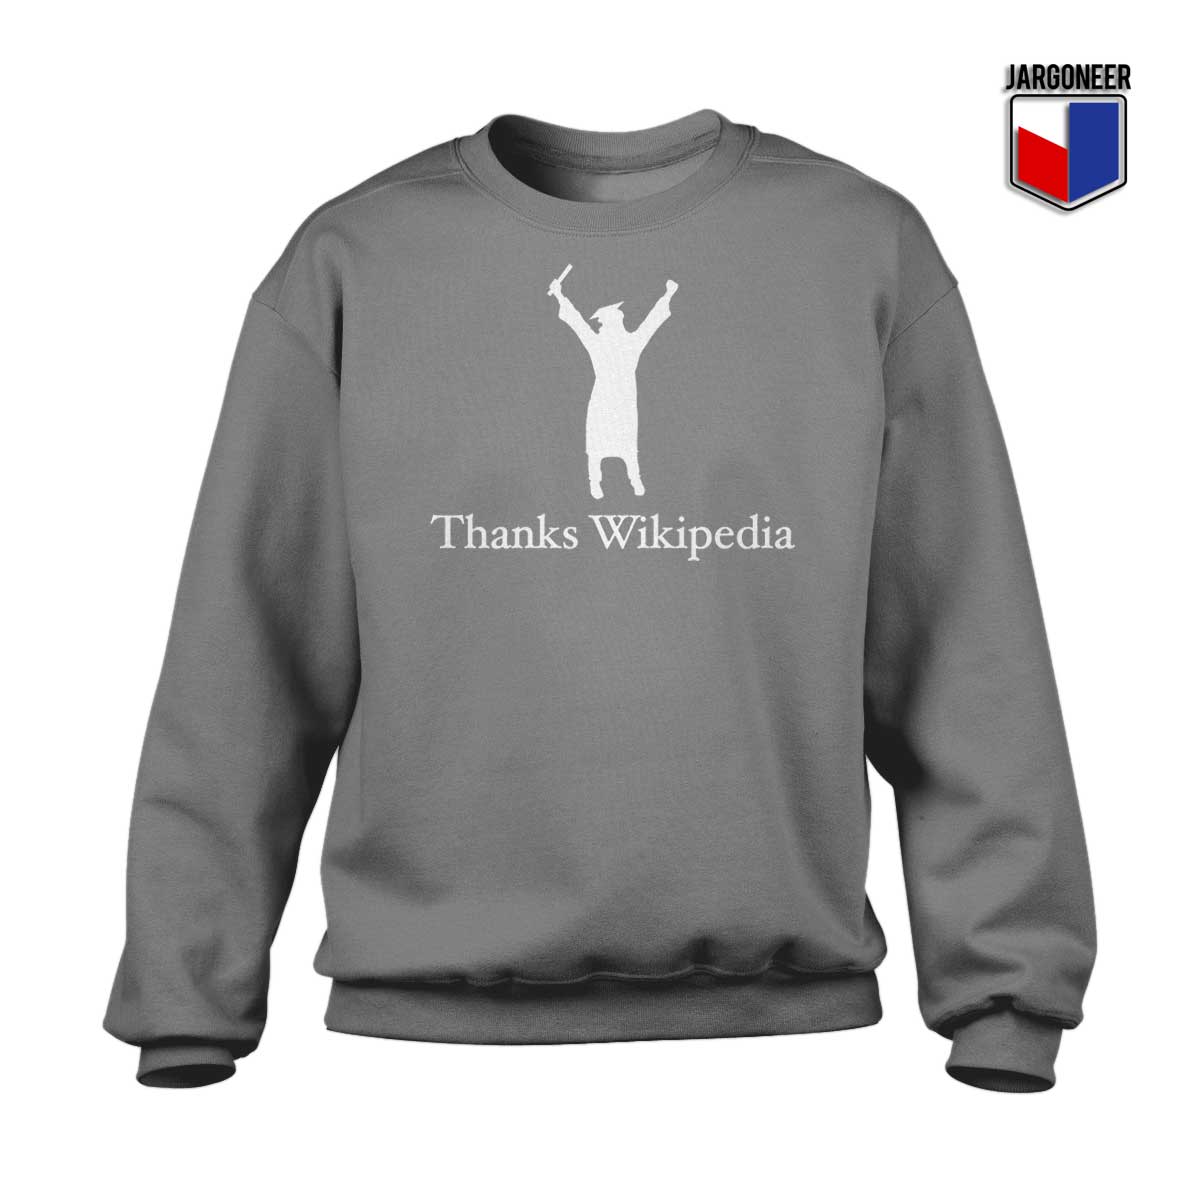 Thanks Wikipedia Gray Sweatshirt - Shop Unique Graphic Cool Shirt Designs